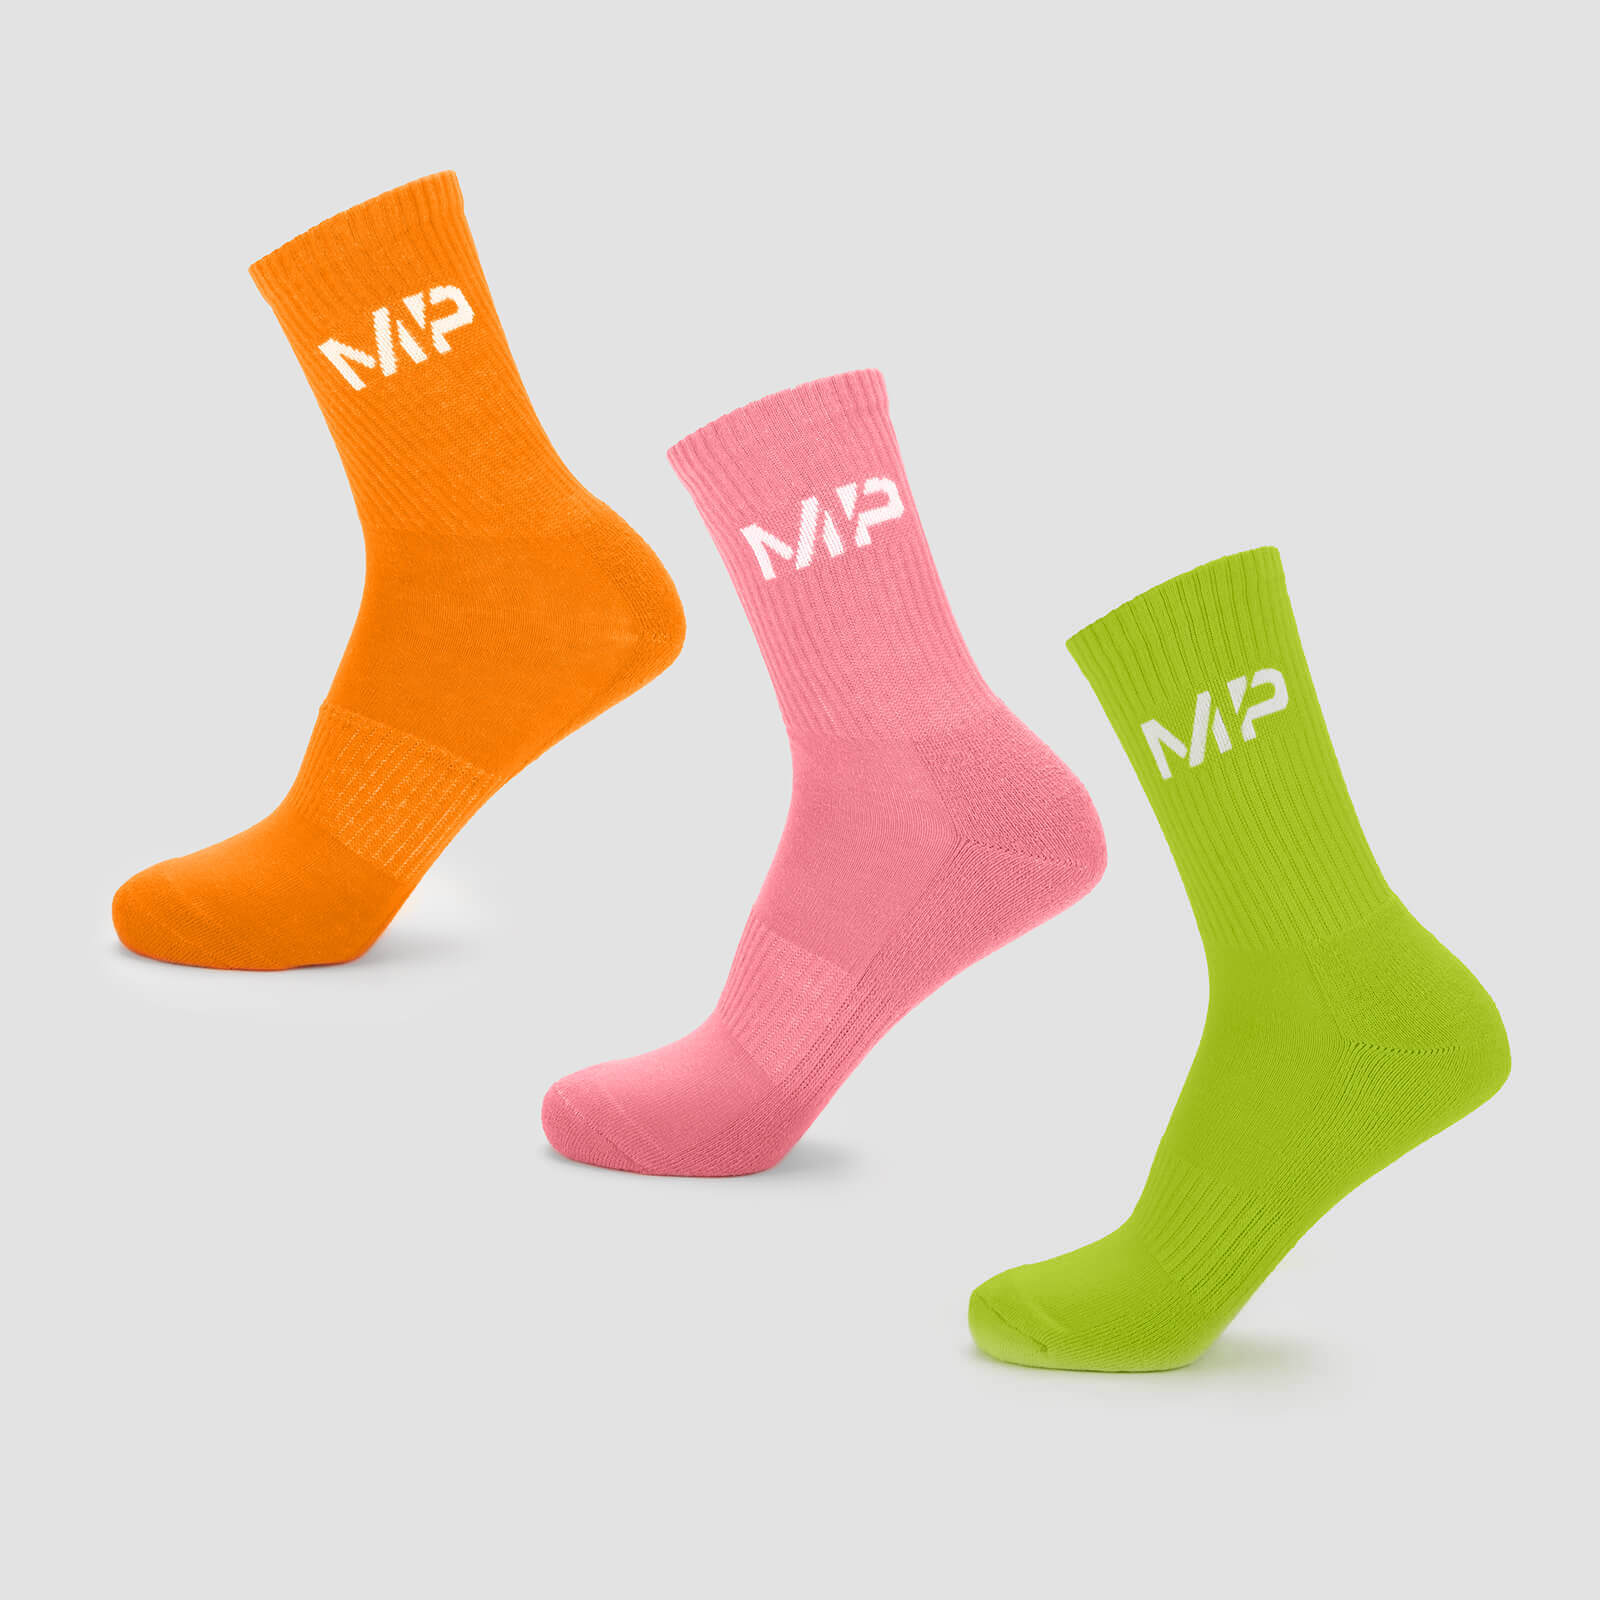 MP Men's Neon Brights Crew Socks (3 Pack) Orange/Lime/Rose - UK 6-8